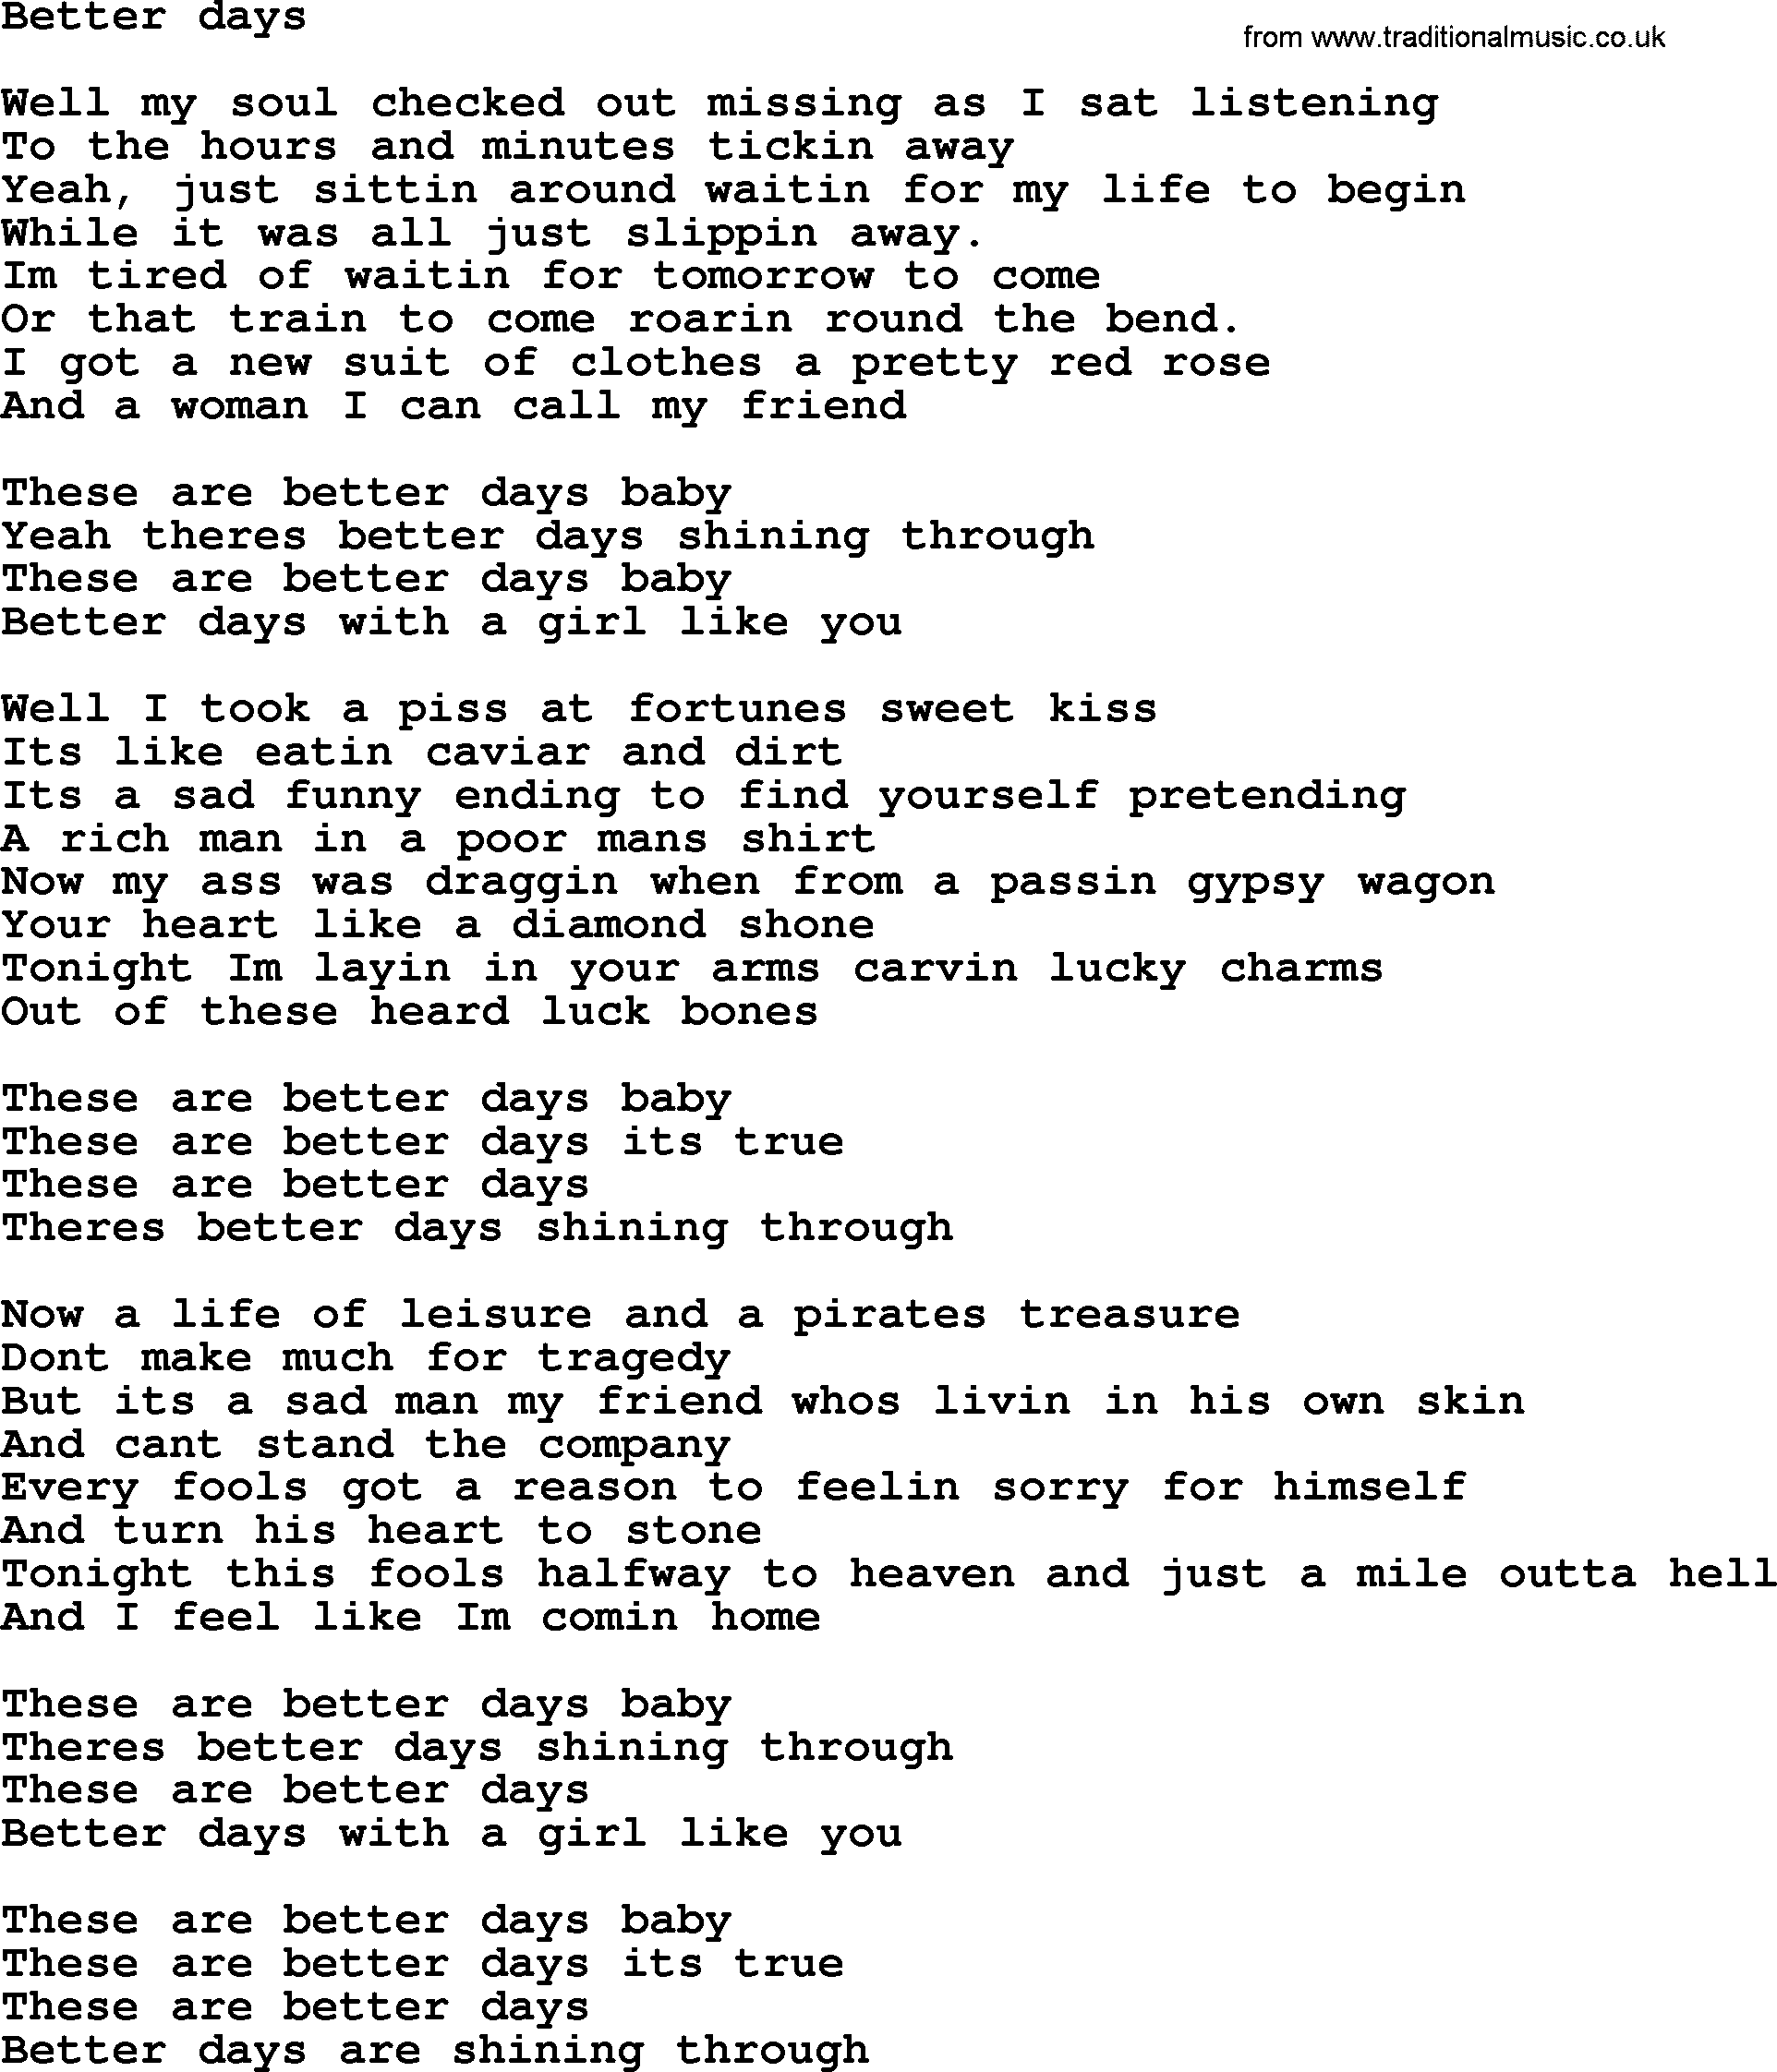 Bruce Springsteen song: Better Days lyrics